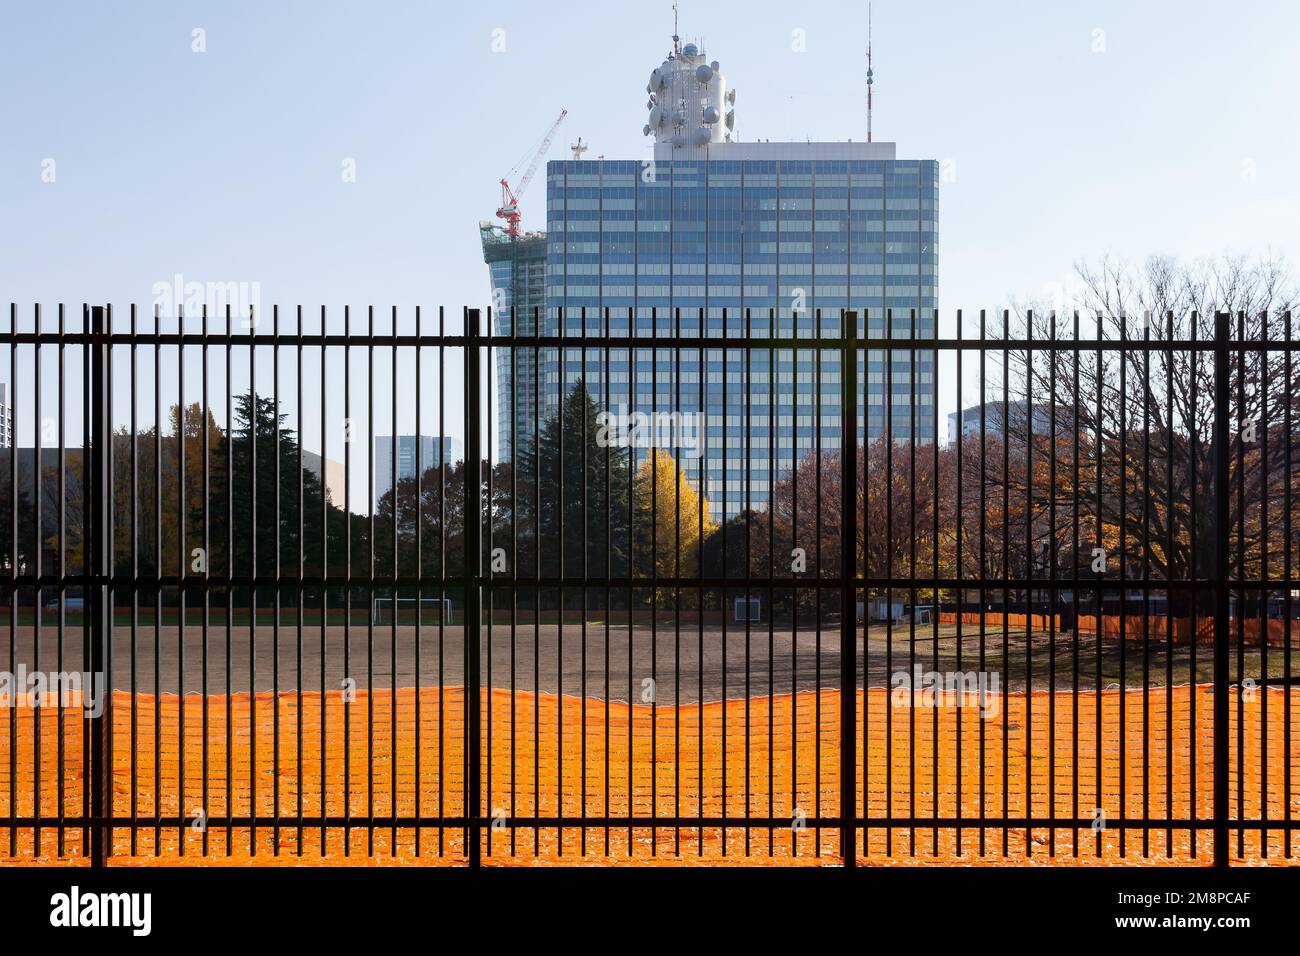 NHK Broadcasting Center behind a fence in Yoyogi park. Shibuya, Tokyo, Japan. Stock Photo